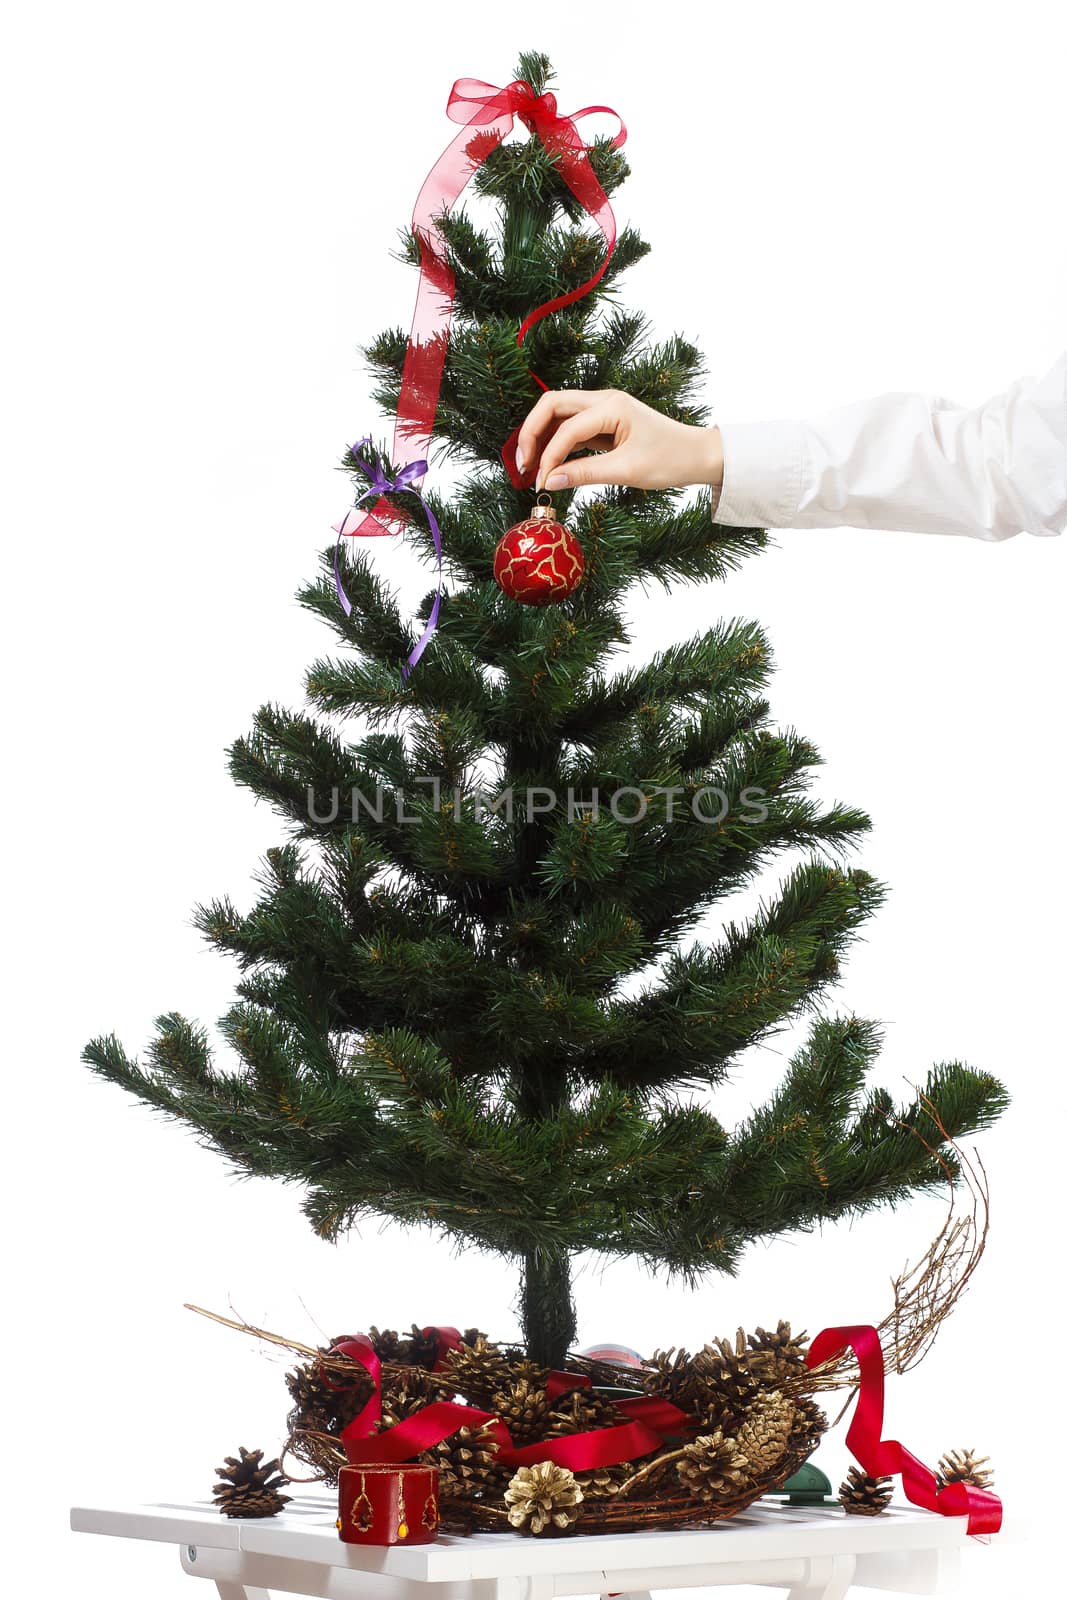 Decorating christmas tree by mrakor